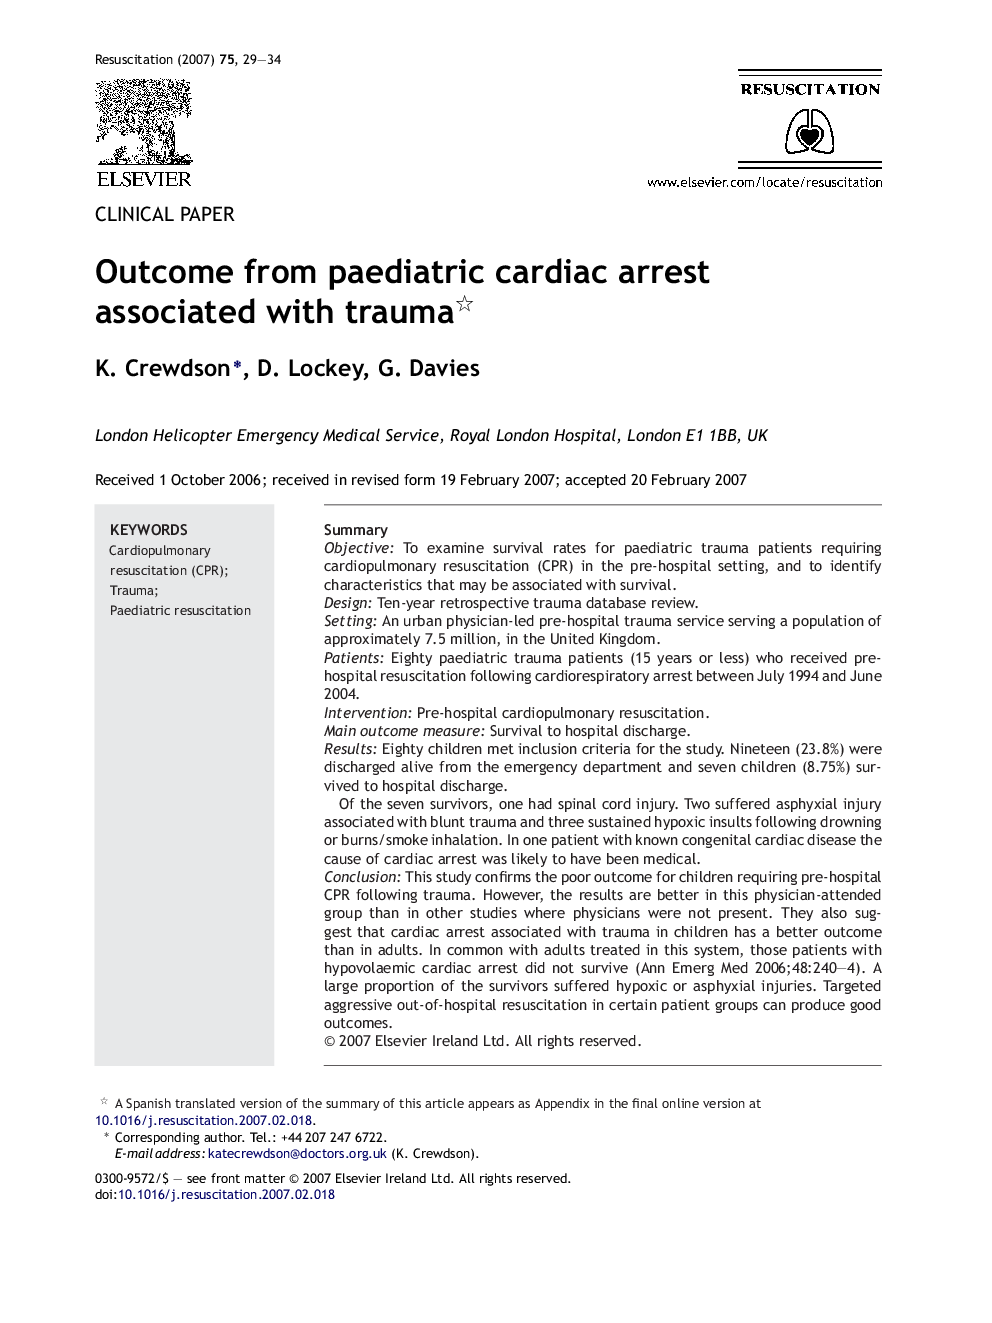 Outcome from paediatric cardiac arrest associated with trauma 